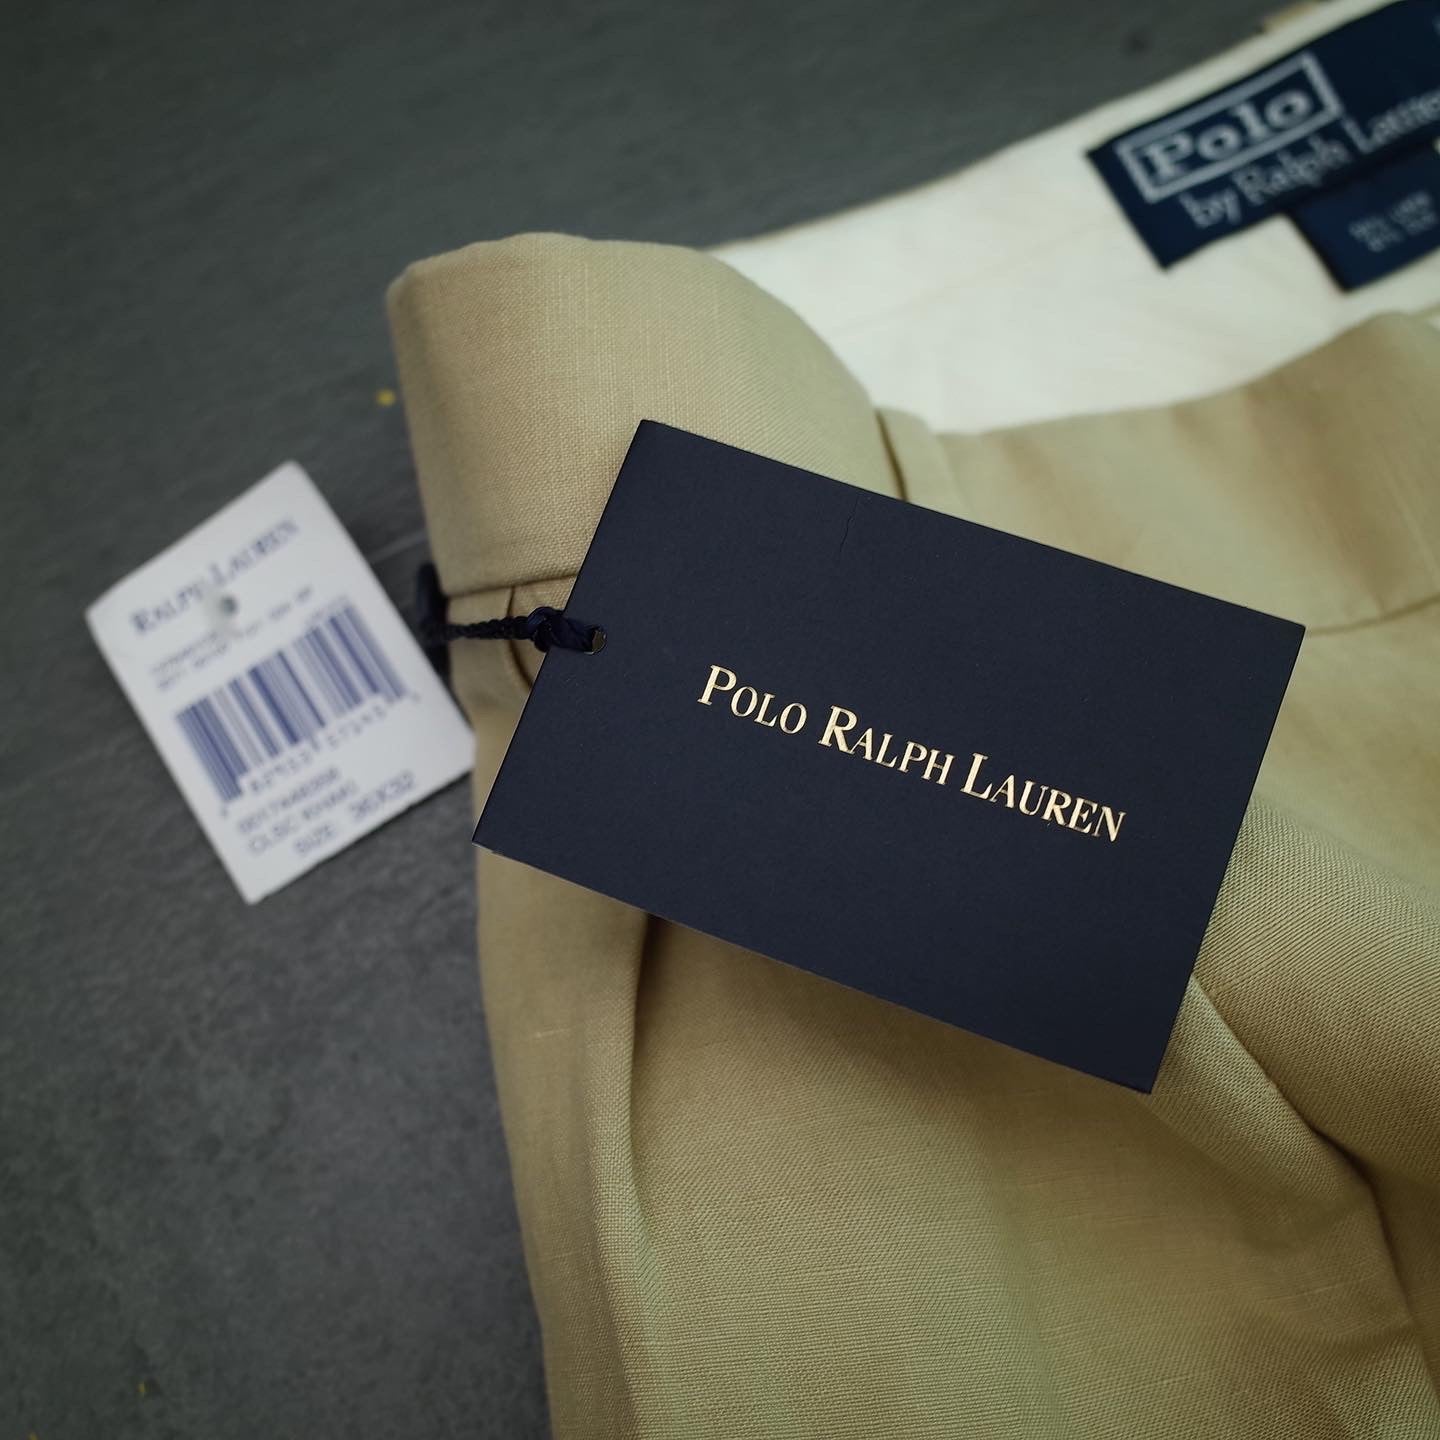 Polo by Ralph Lauren Linen/Silk Tucked Pants